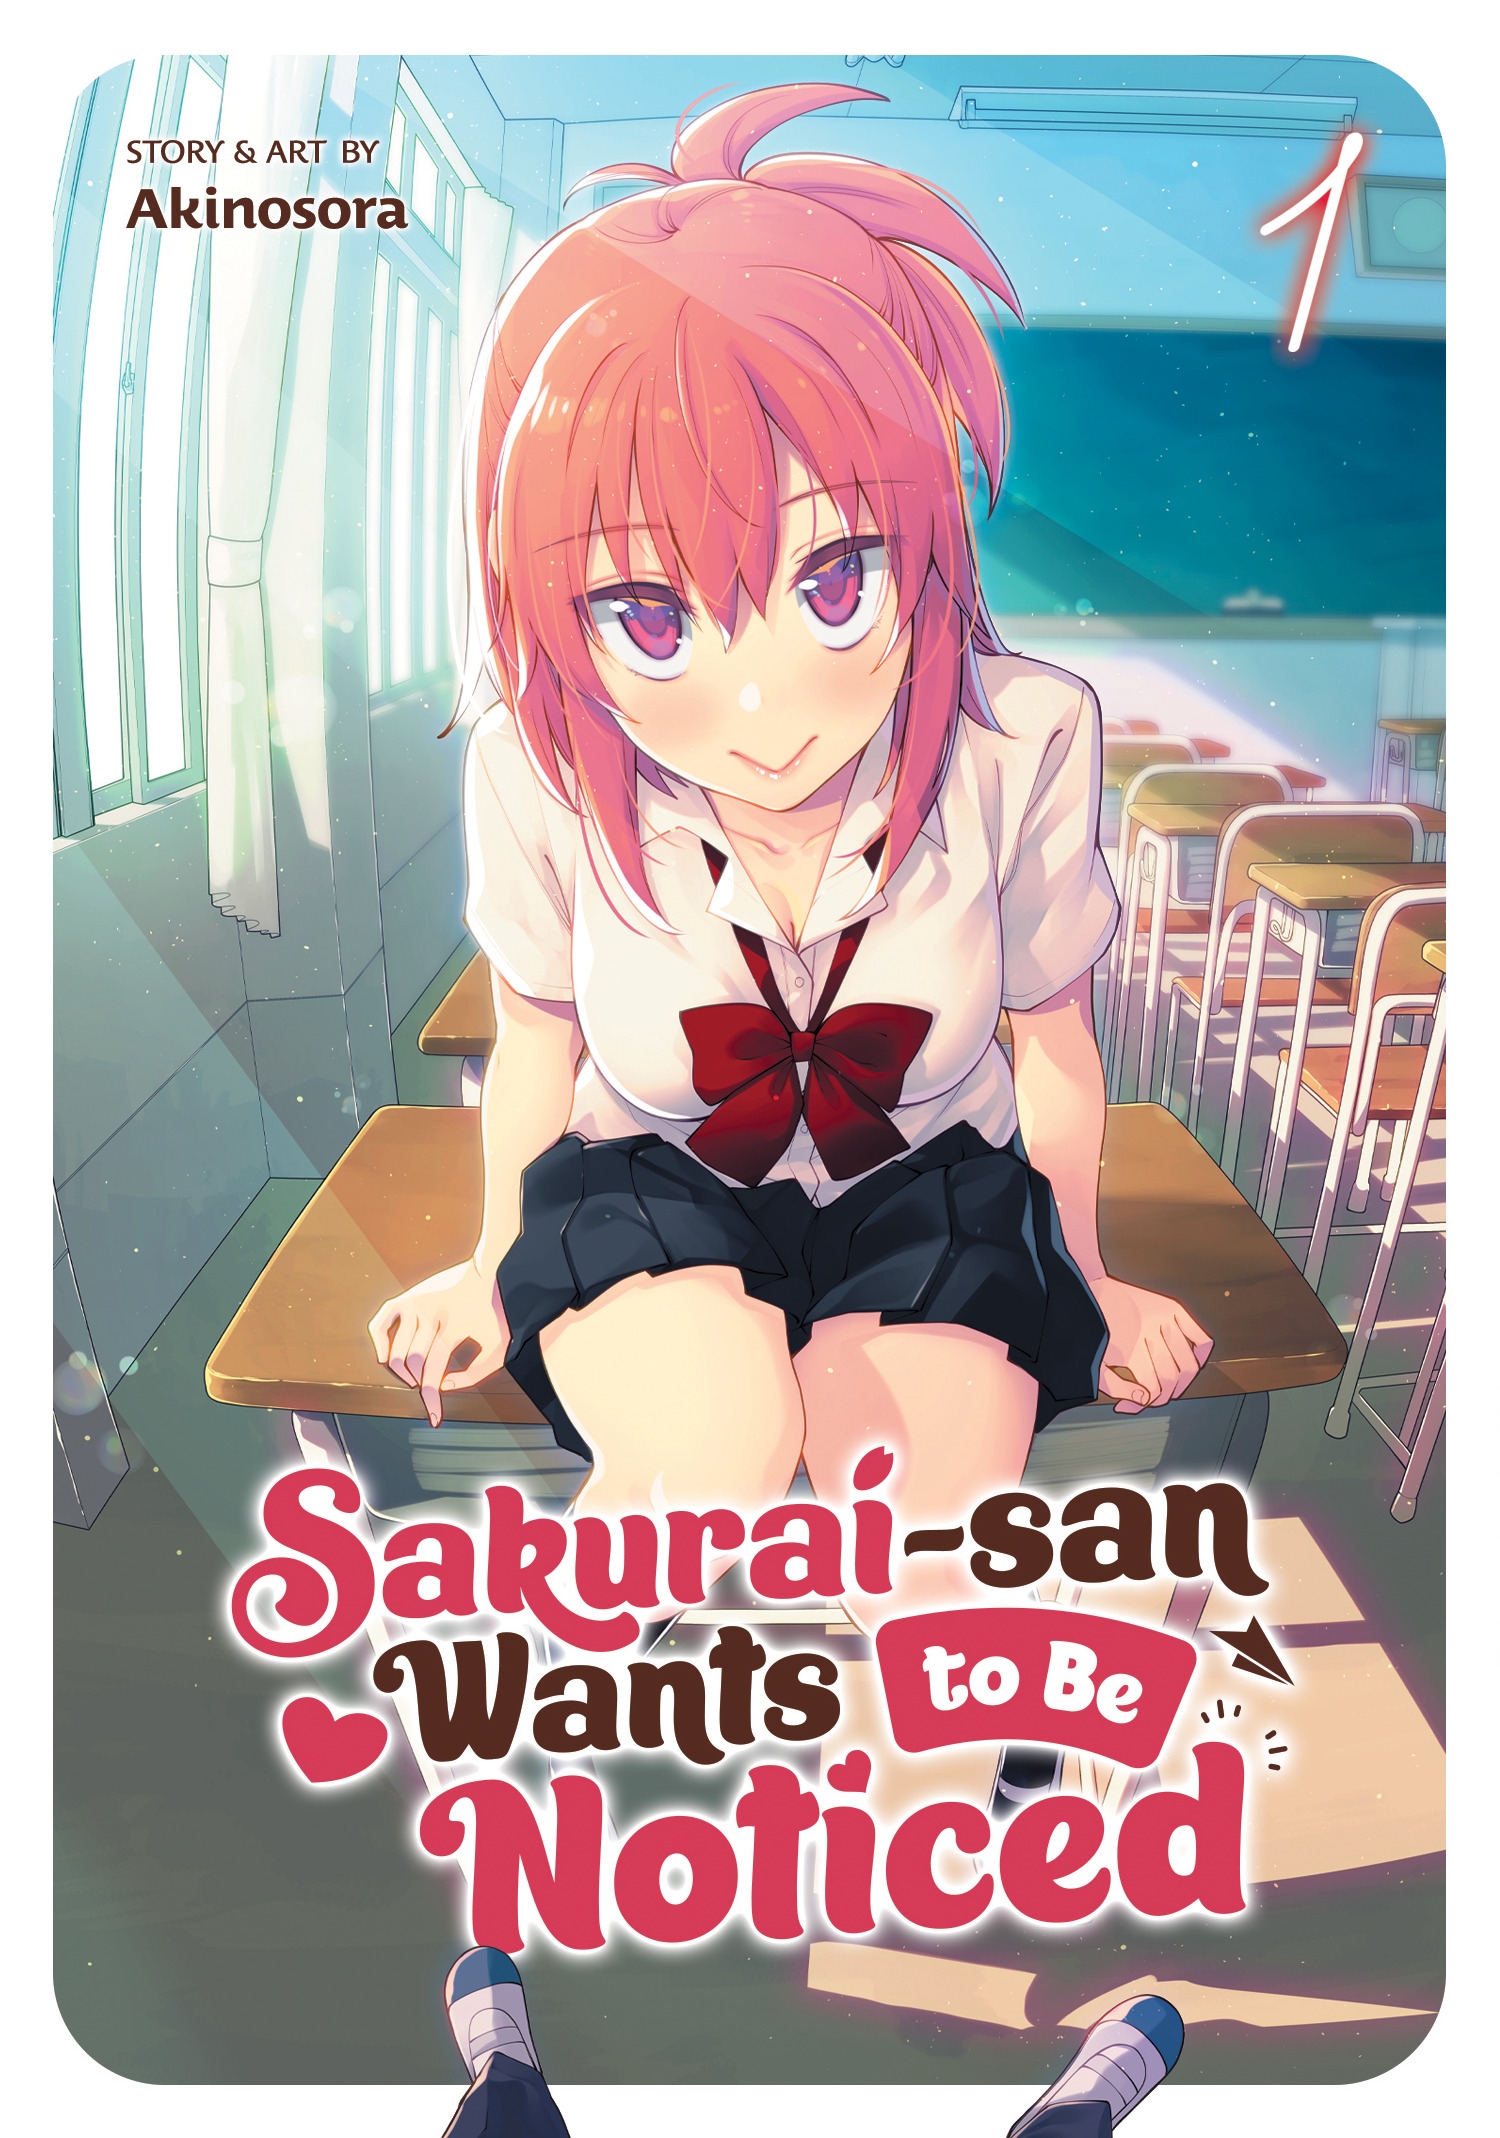 Sakurai-san Wants to be Noticed by Akinosora, published by Seven Seas Entertainment; an ecchi romantic comedy manga.